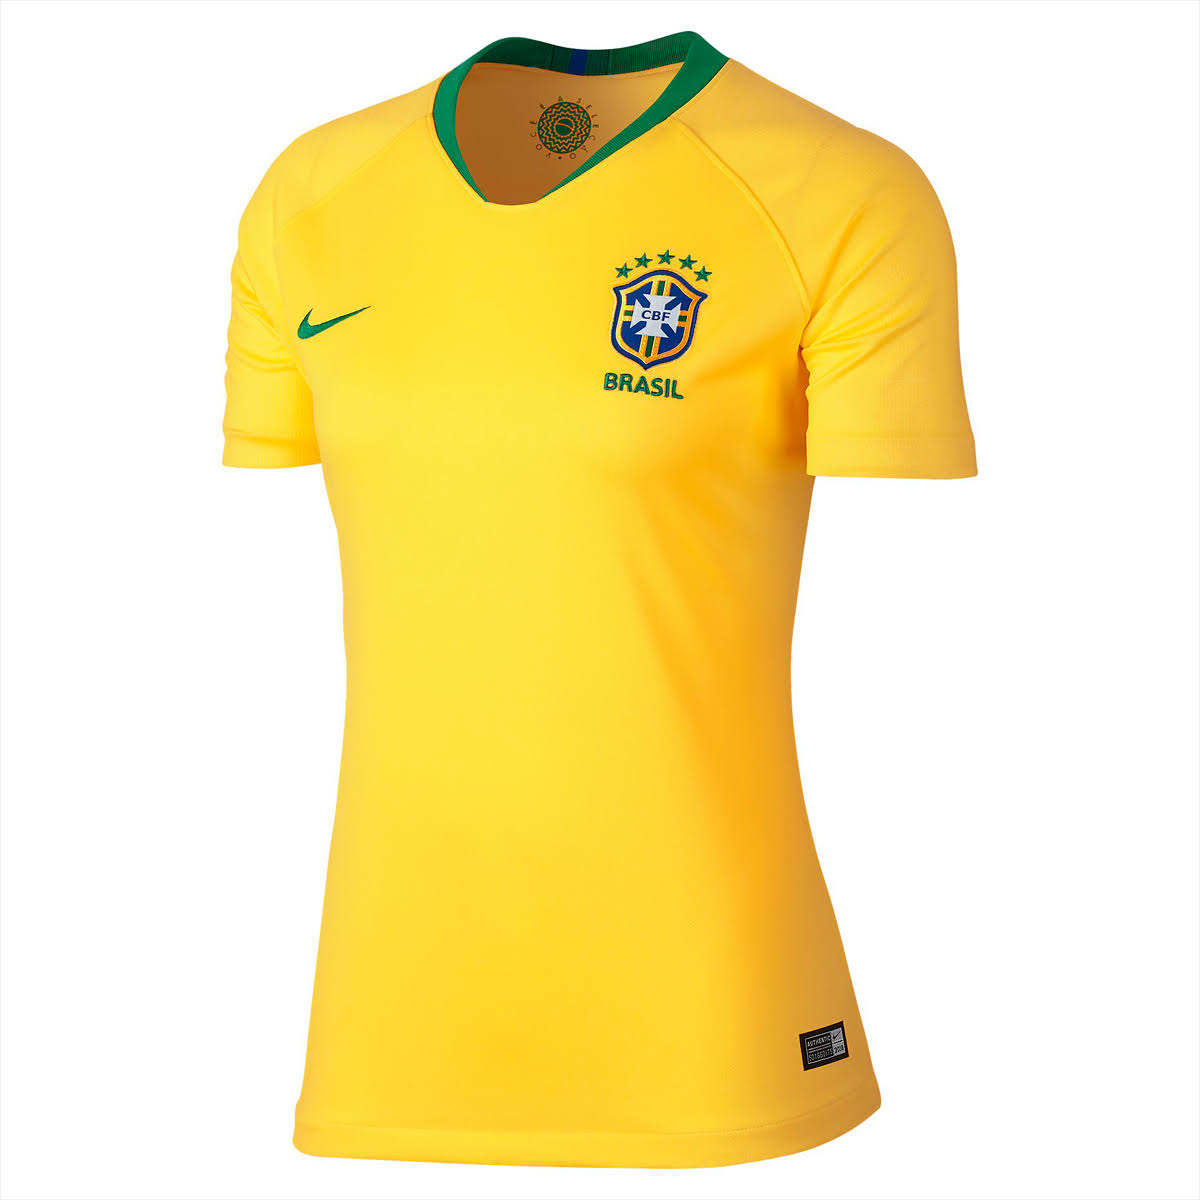 brazil world cup 2018 jersey